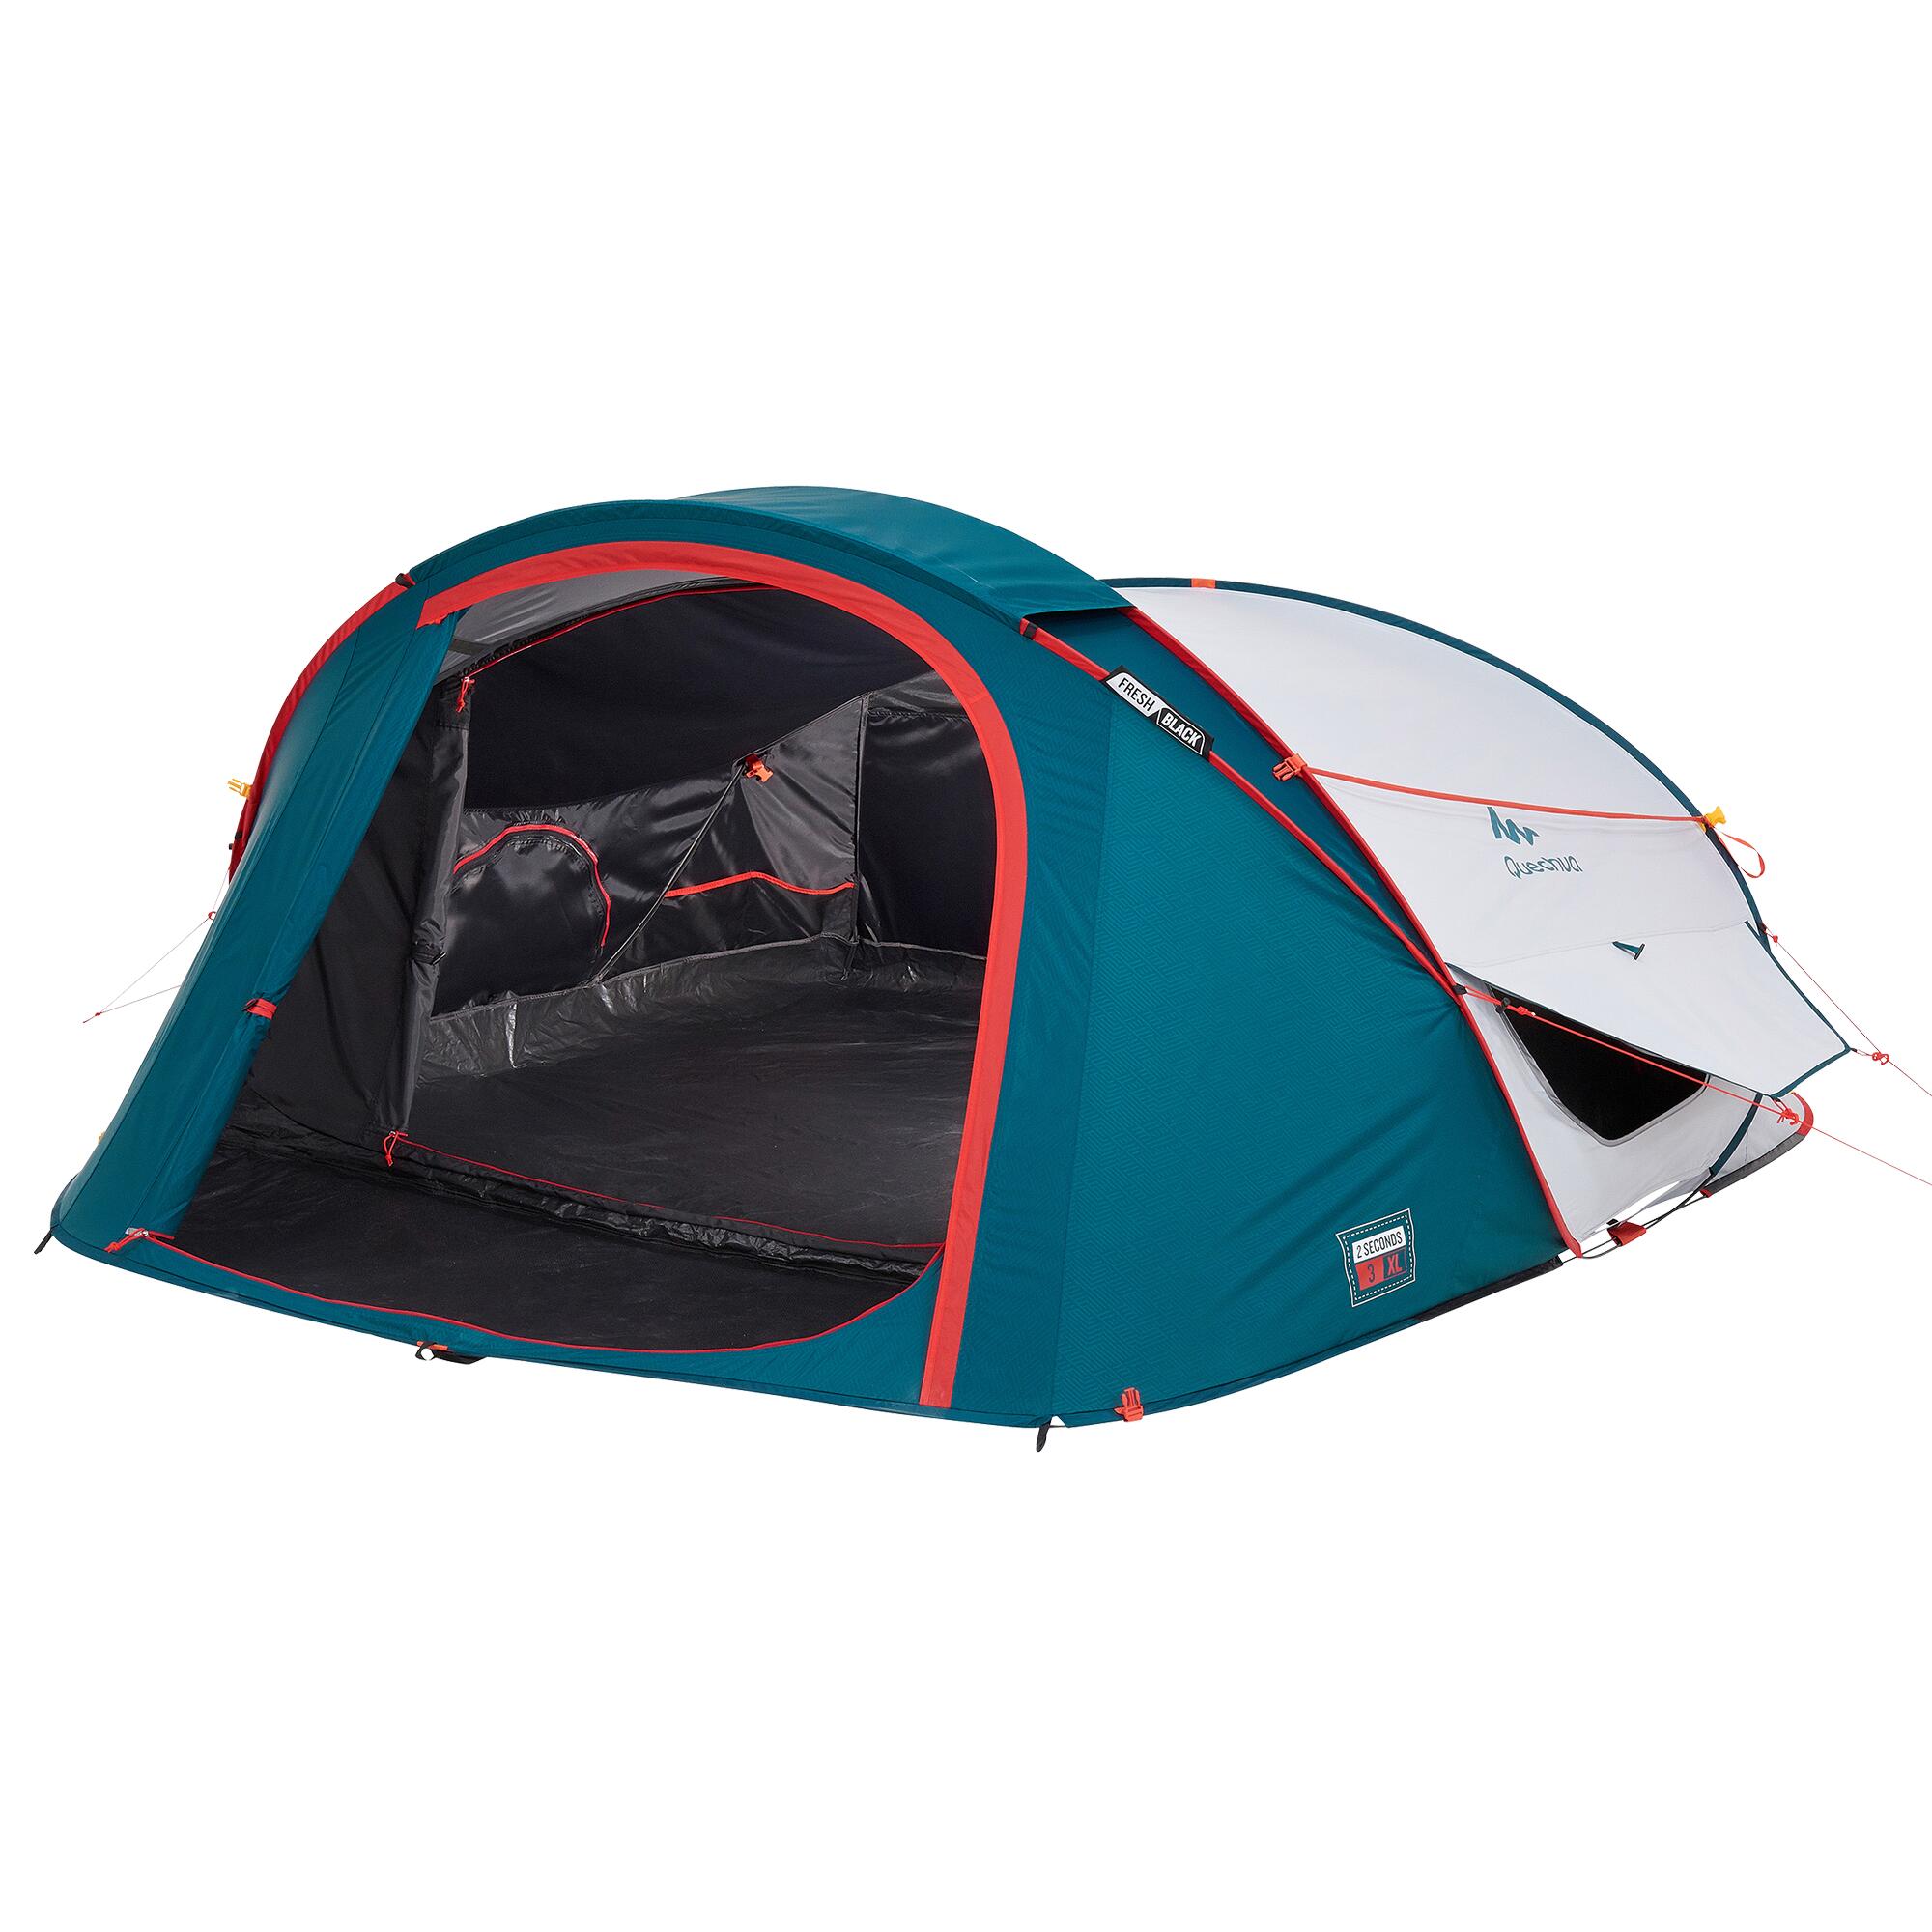 Camping tent - 2 SECONDS XL - 3-person - Fresh & Black 9/16